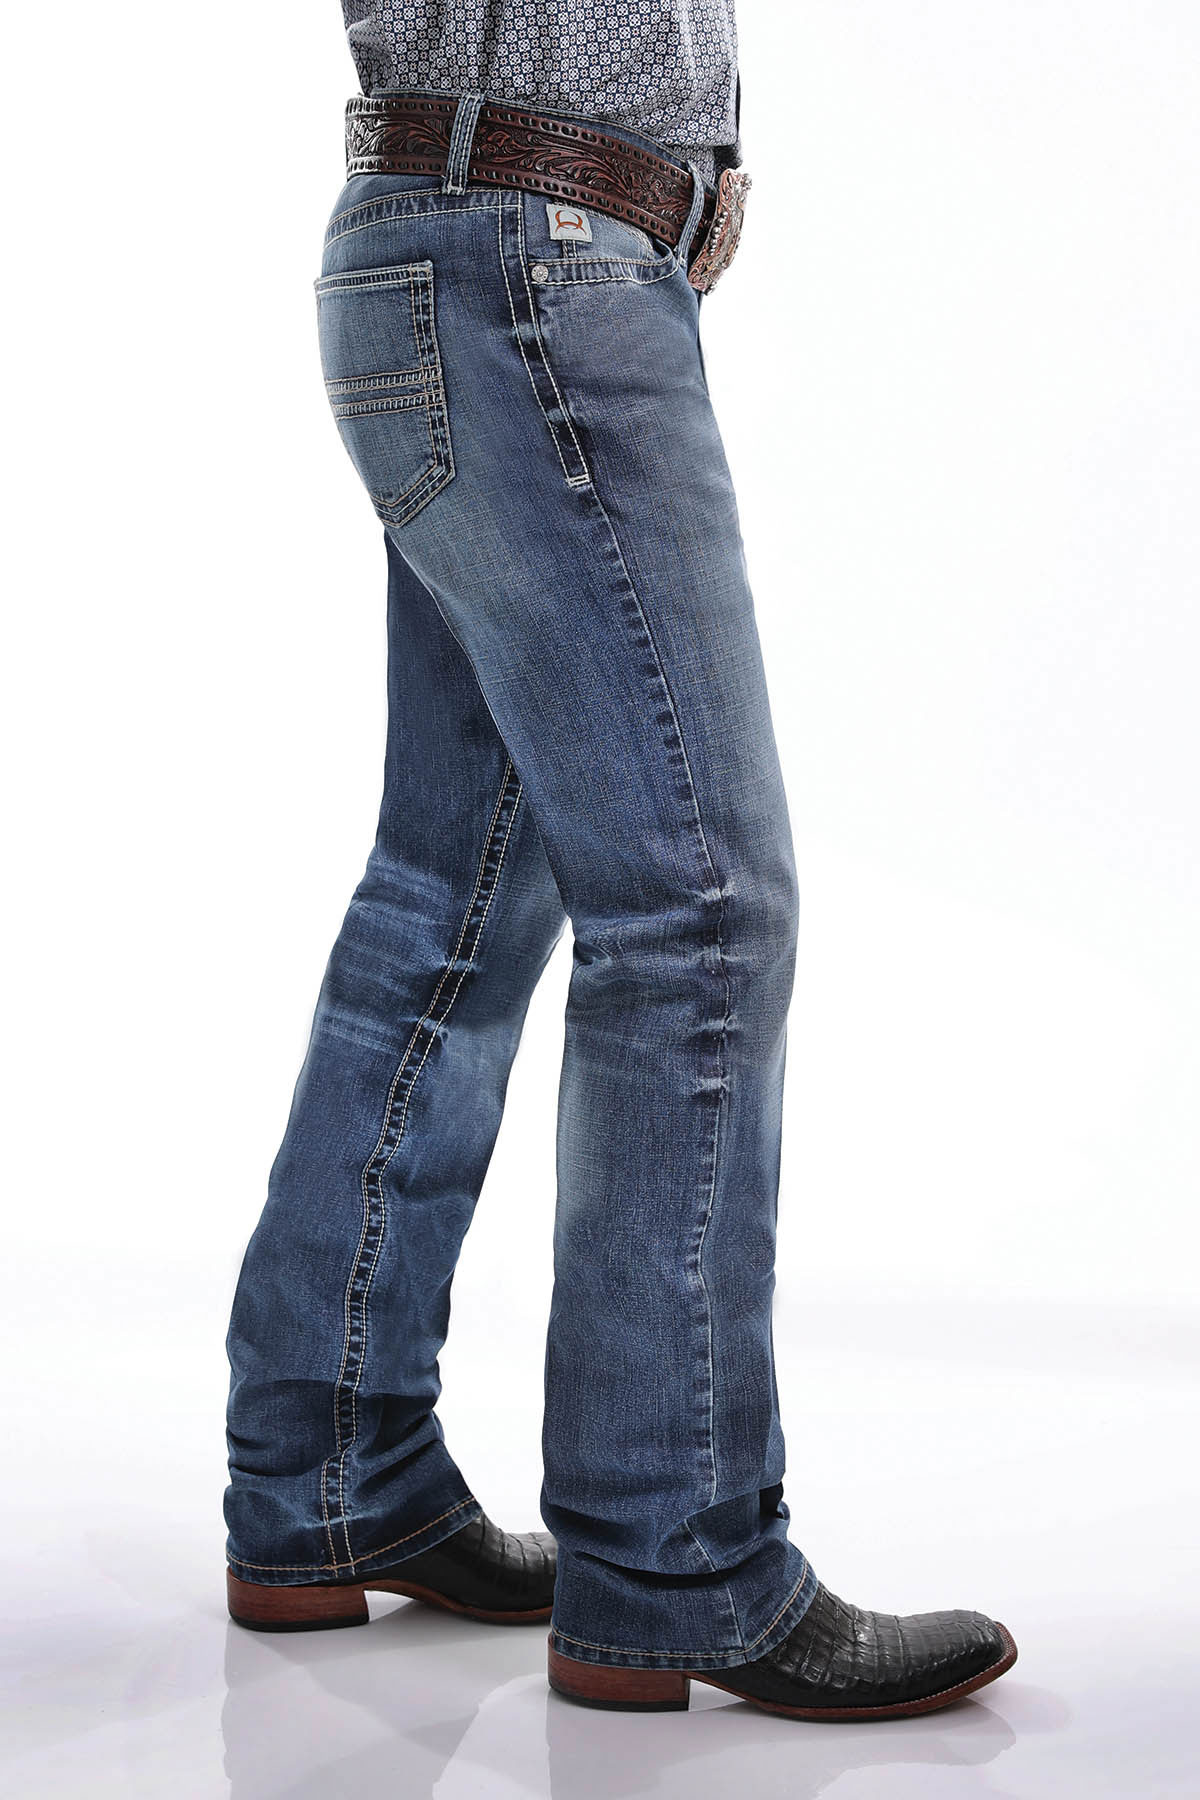 cinch ian arenaflex jeans